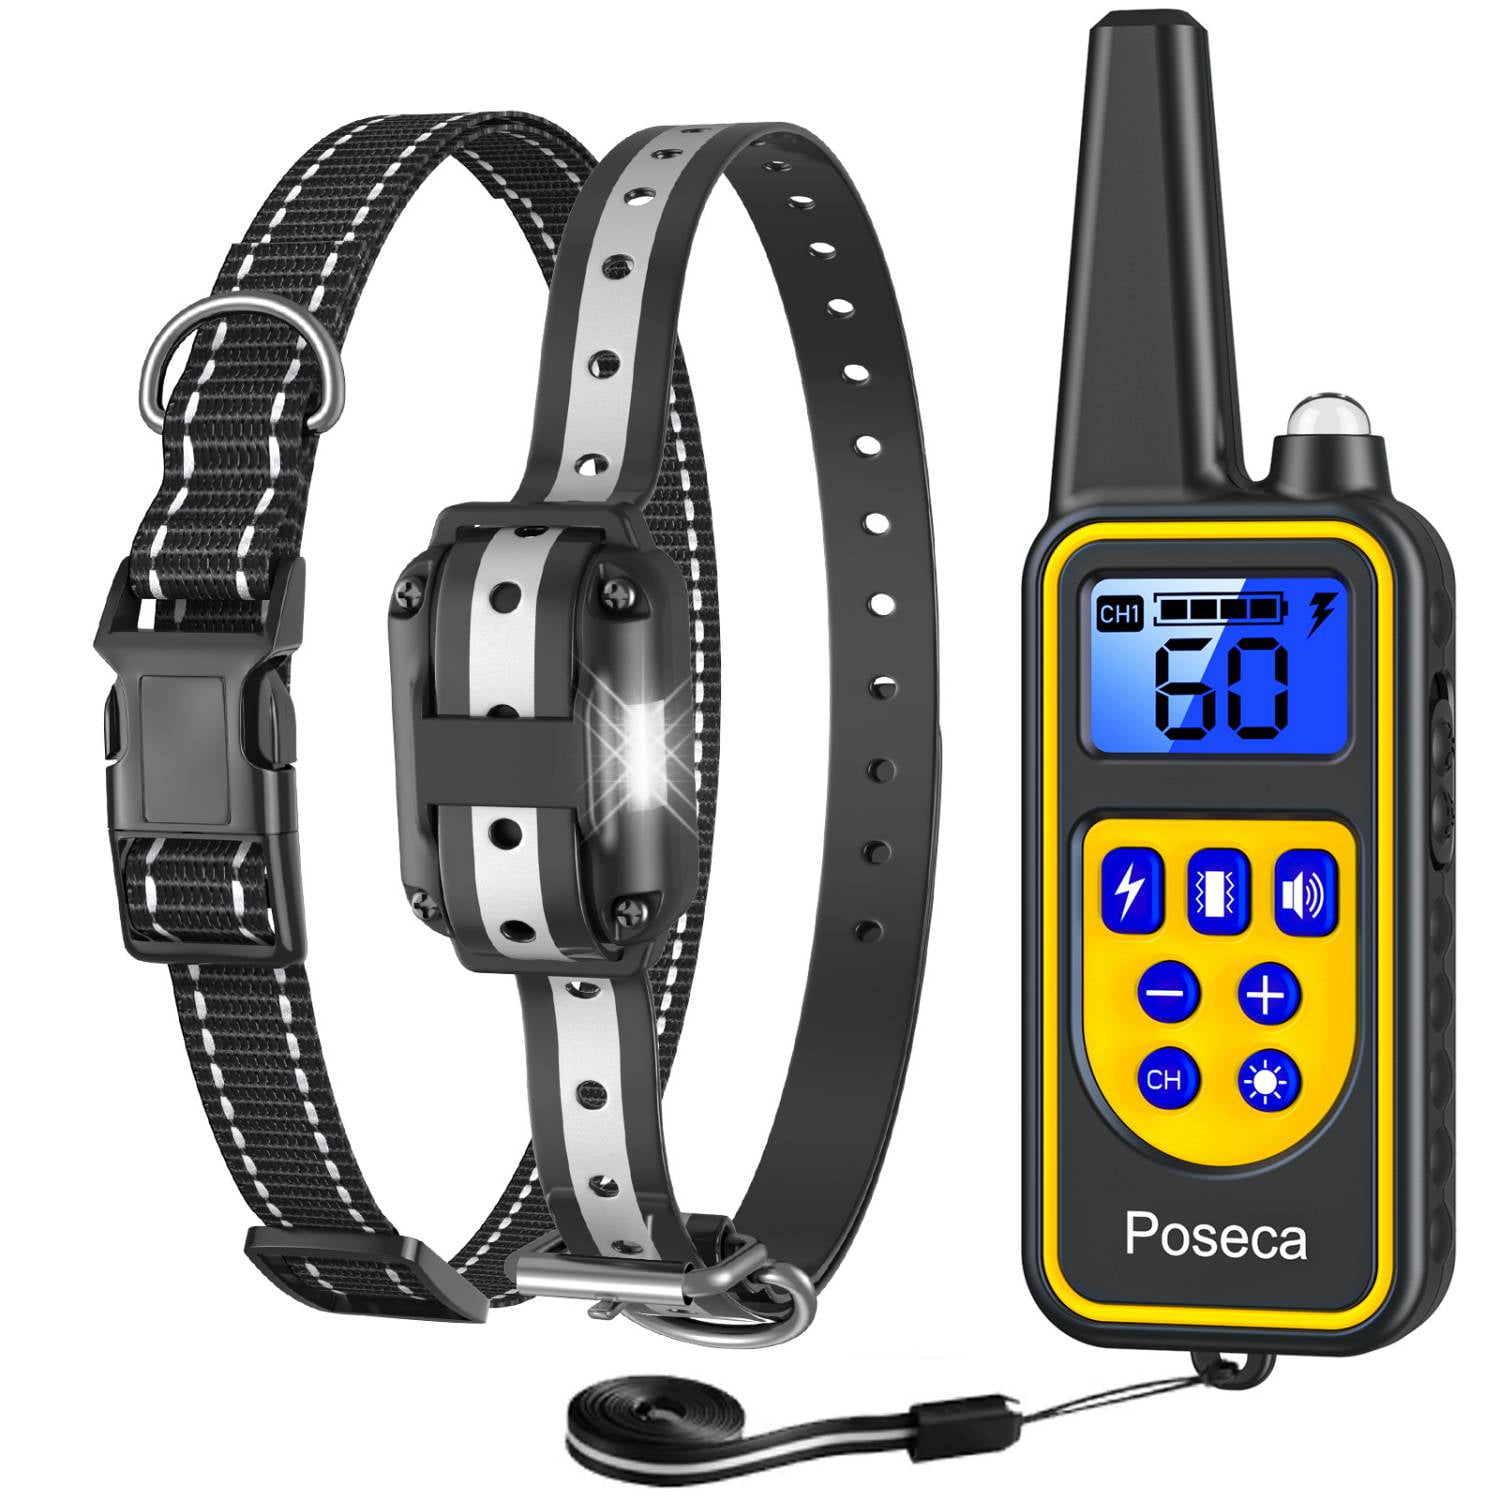 4 Modes Dog Training FREE Training Remote Shock Collar for Small/Medium Dogs 